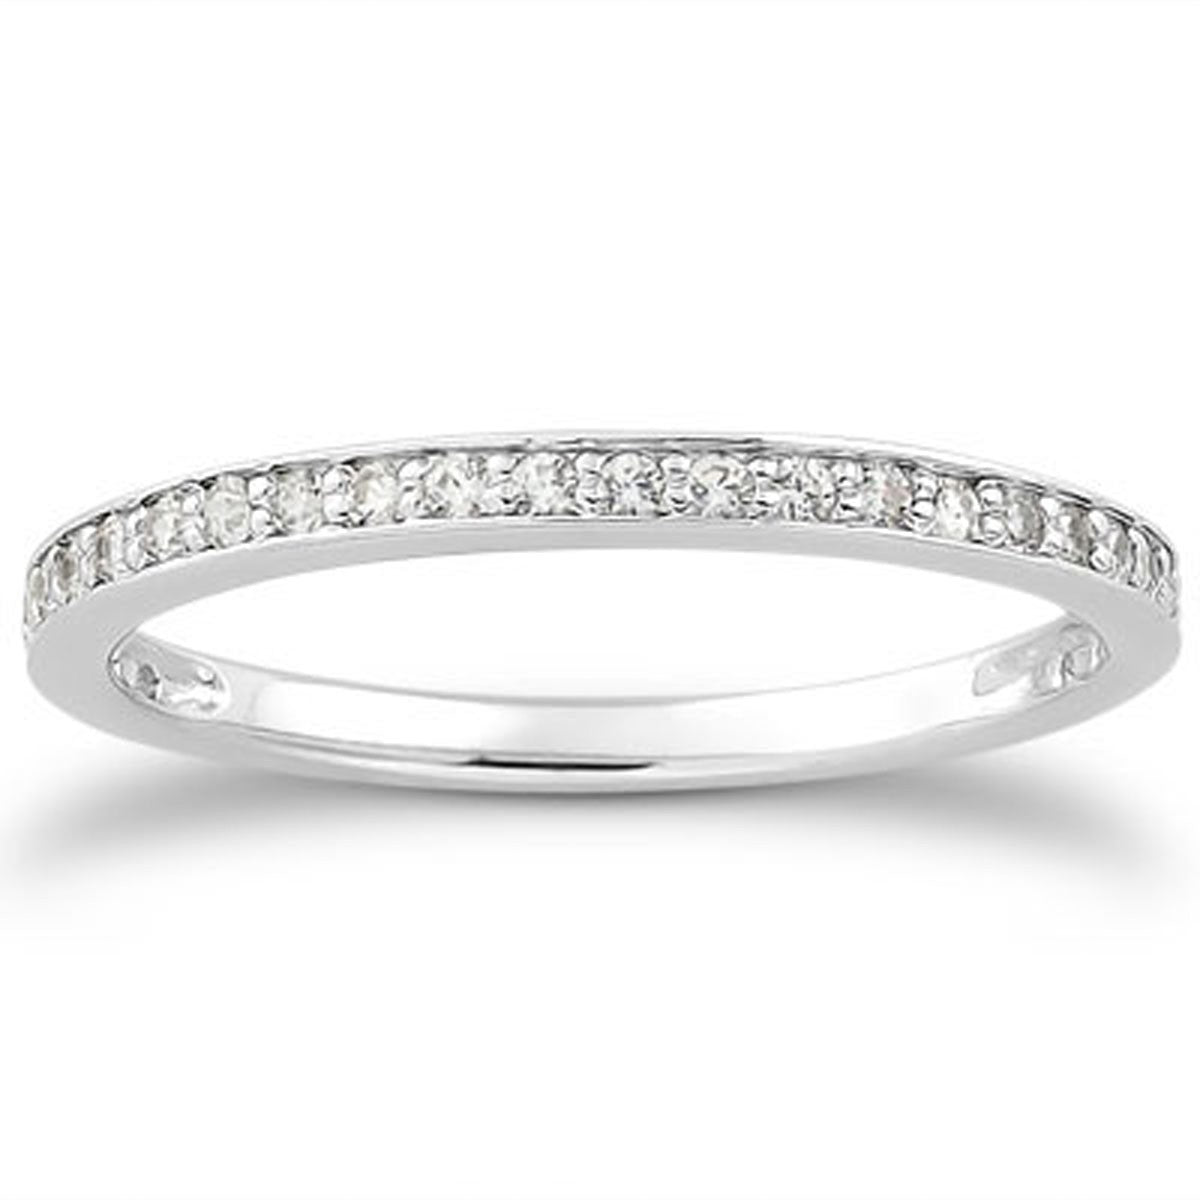 14k White Gold Micro-pave Diamond Wedding Ring Band Set 3/4 Around